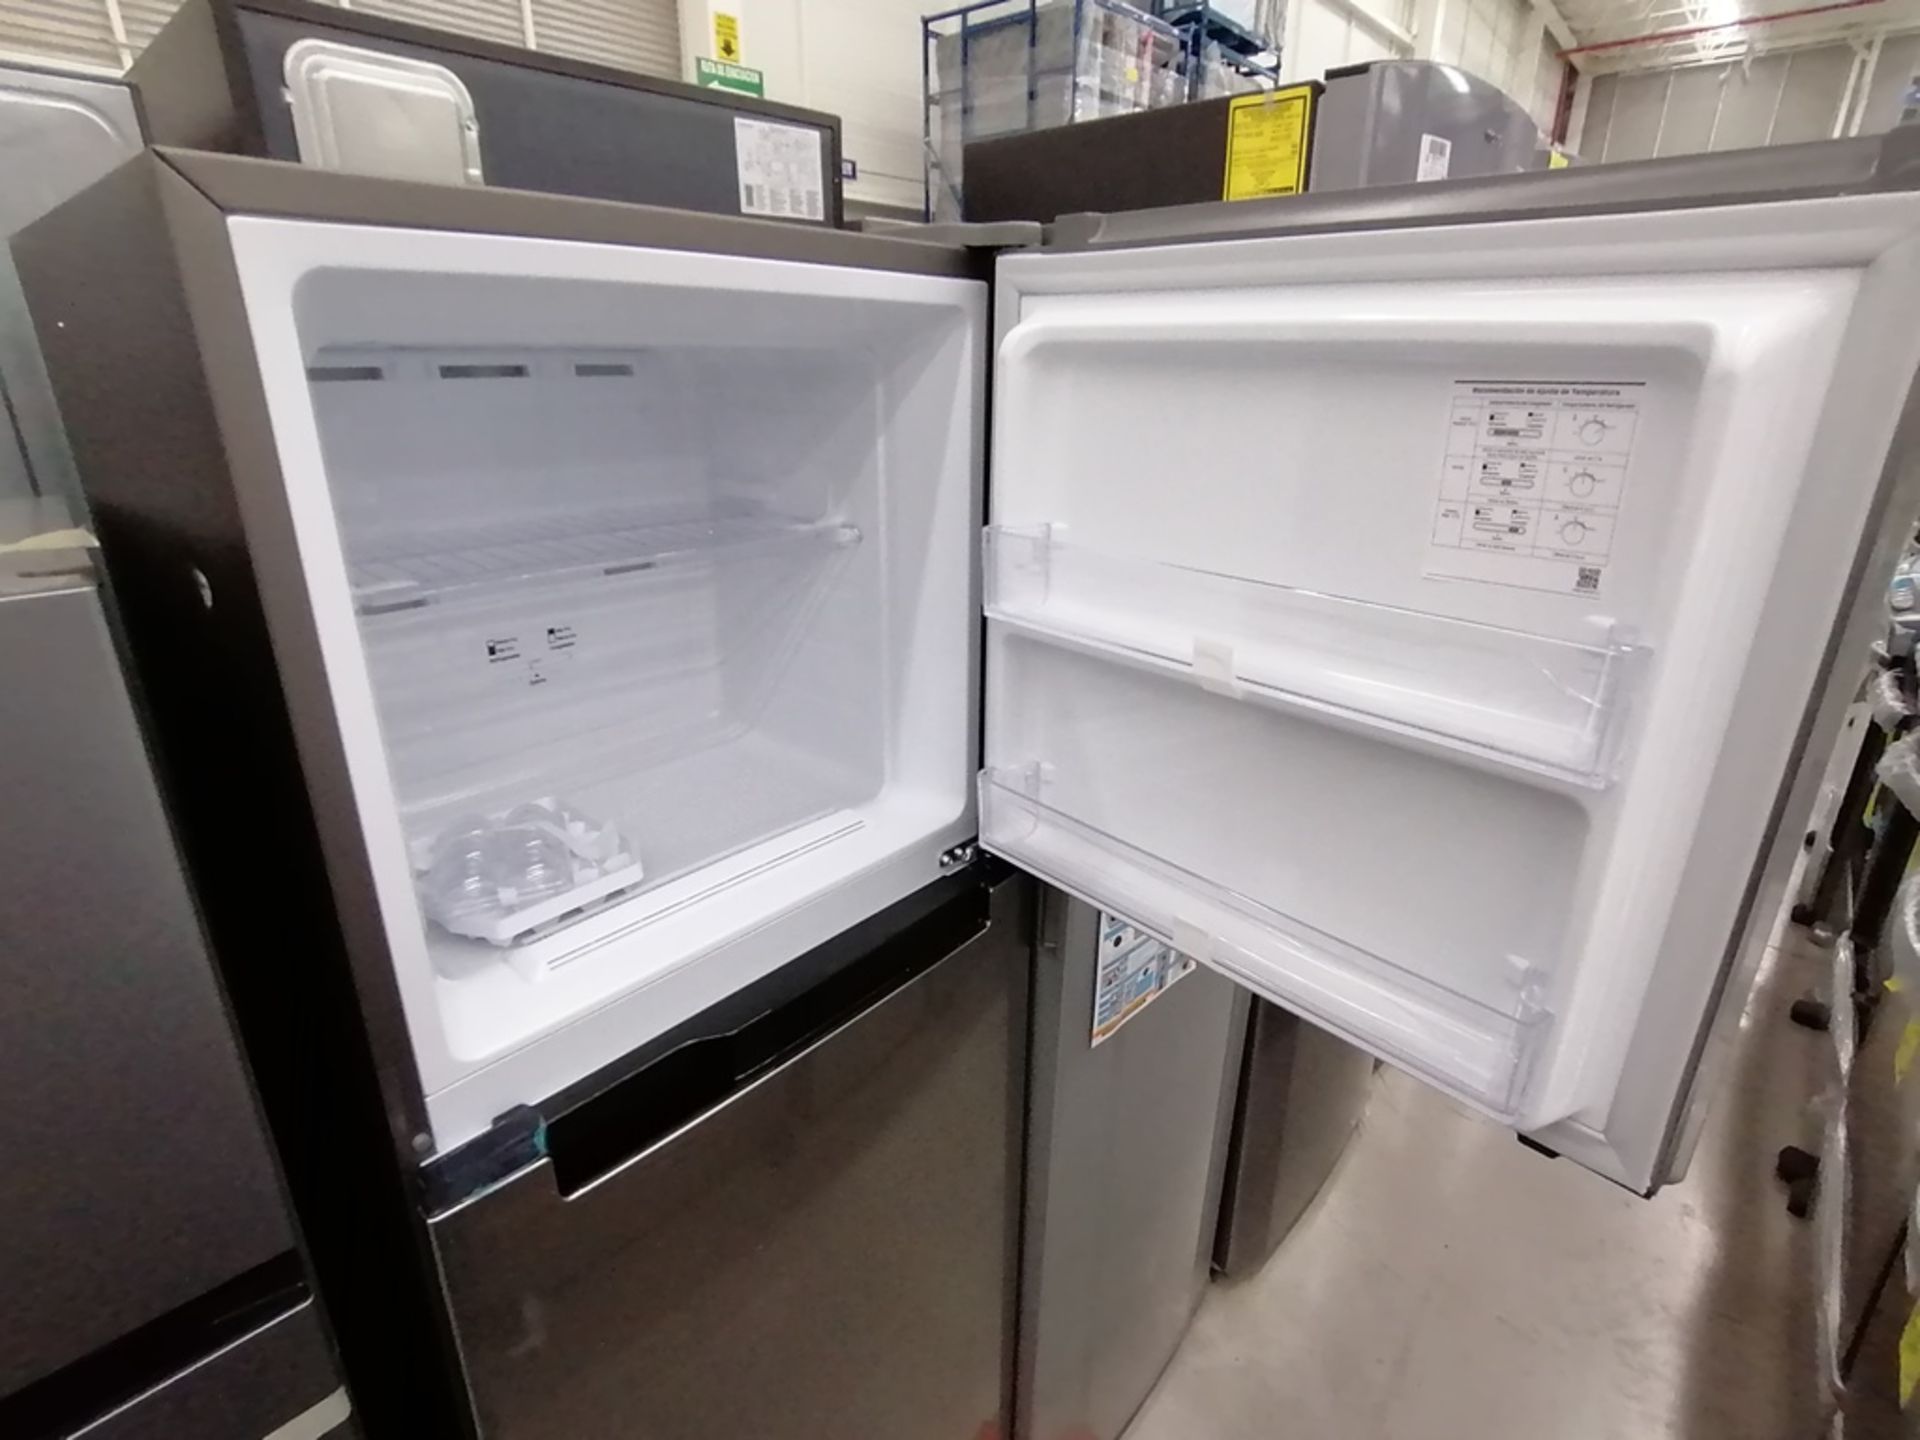 Lote de 2 refrigeradores incluye: 1 Refrigerador, Marca Samsung, Modelo RT29K500JS8, Serie 0AZS4BAR - Image 12 of 16